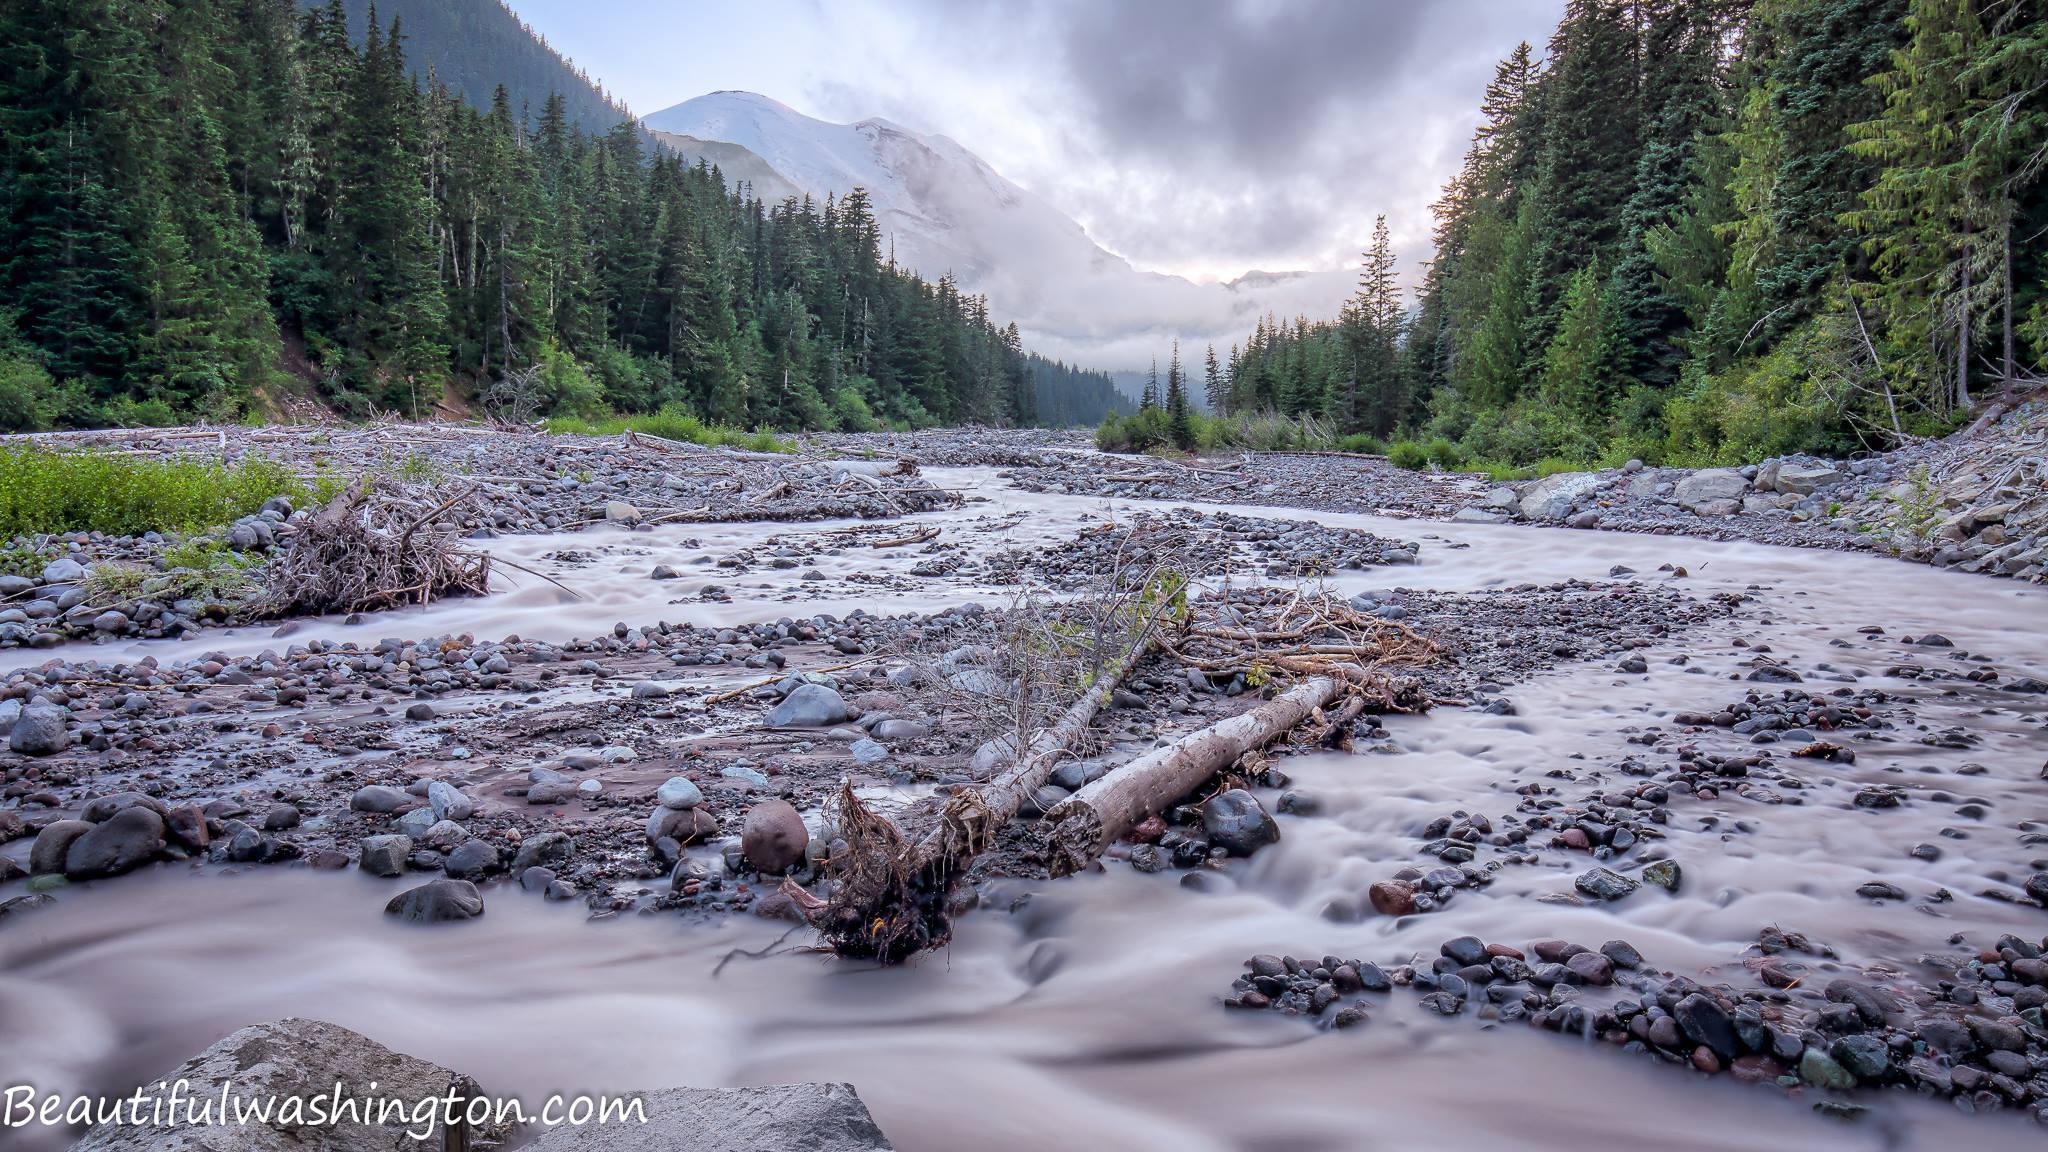 Photo from the Mount Rainier Region, Washington State